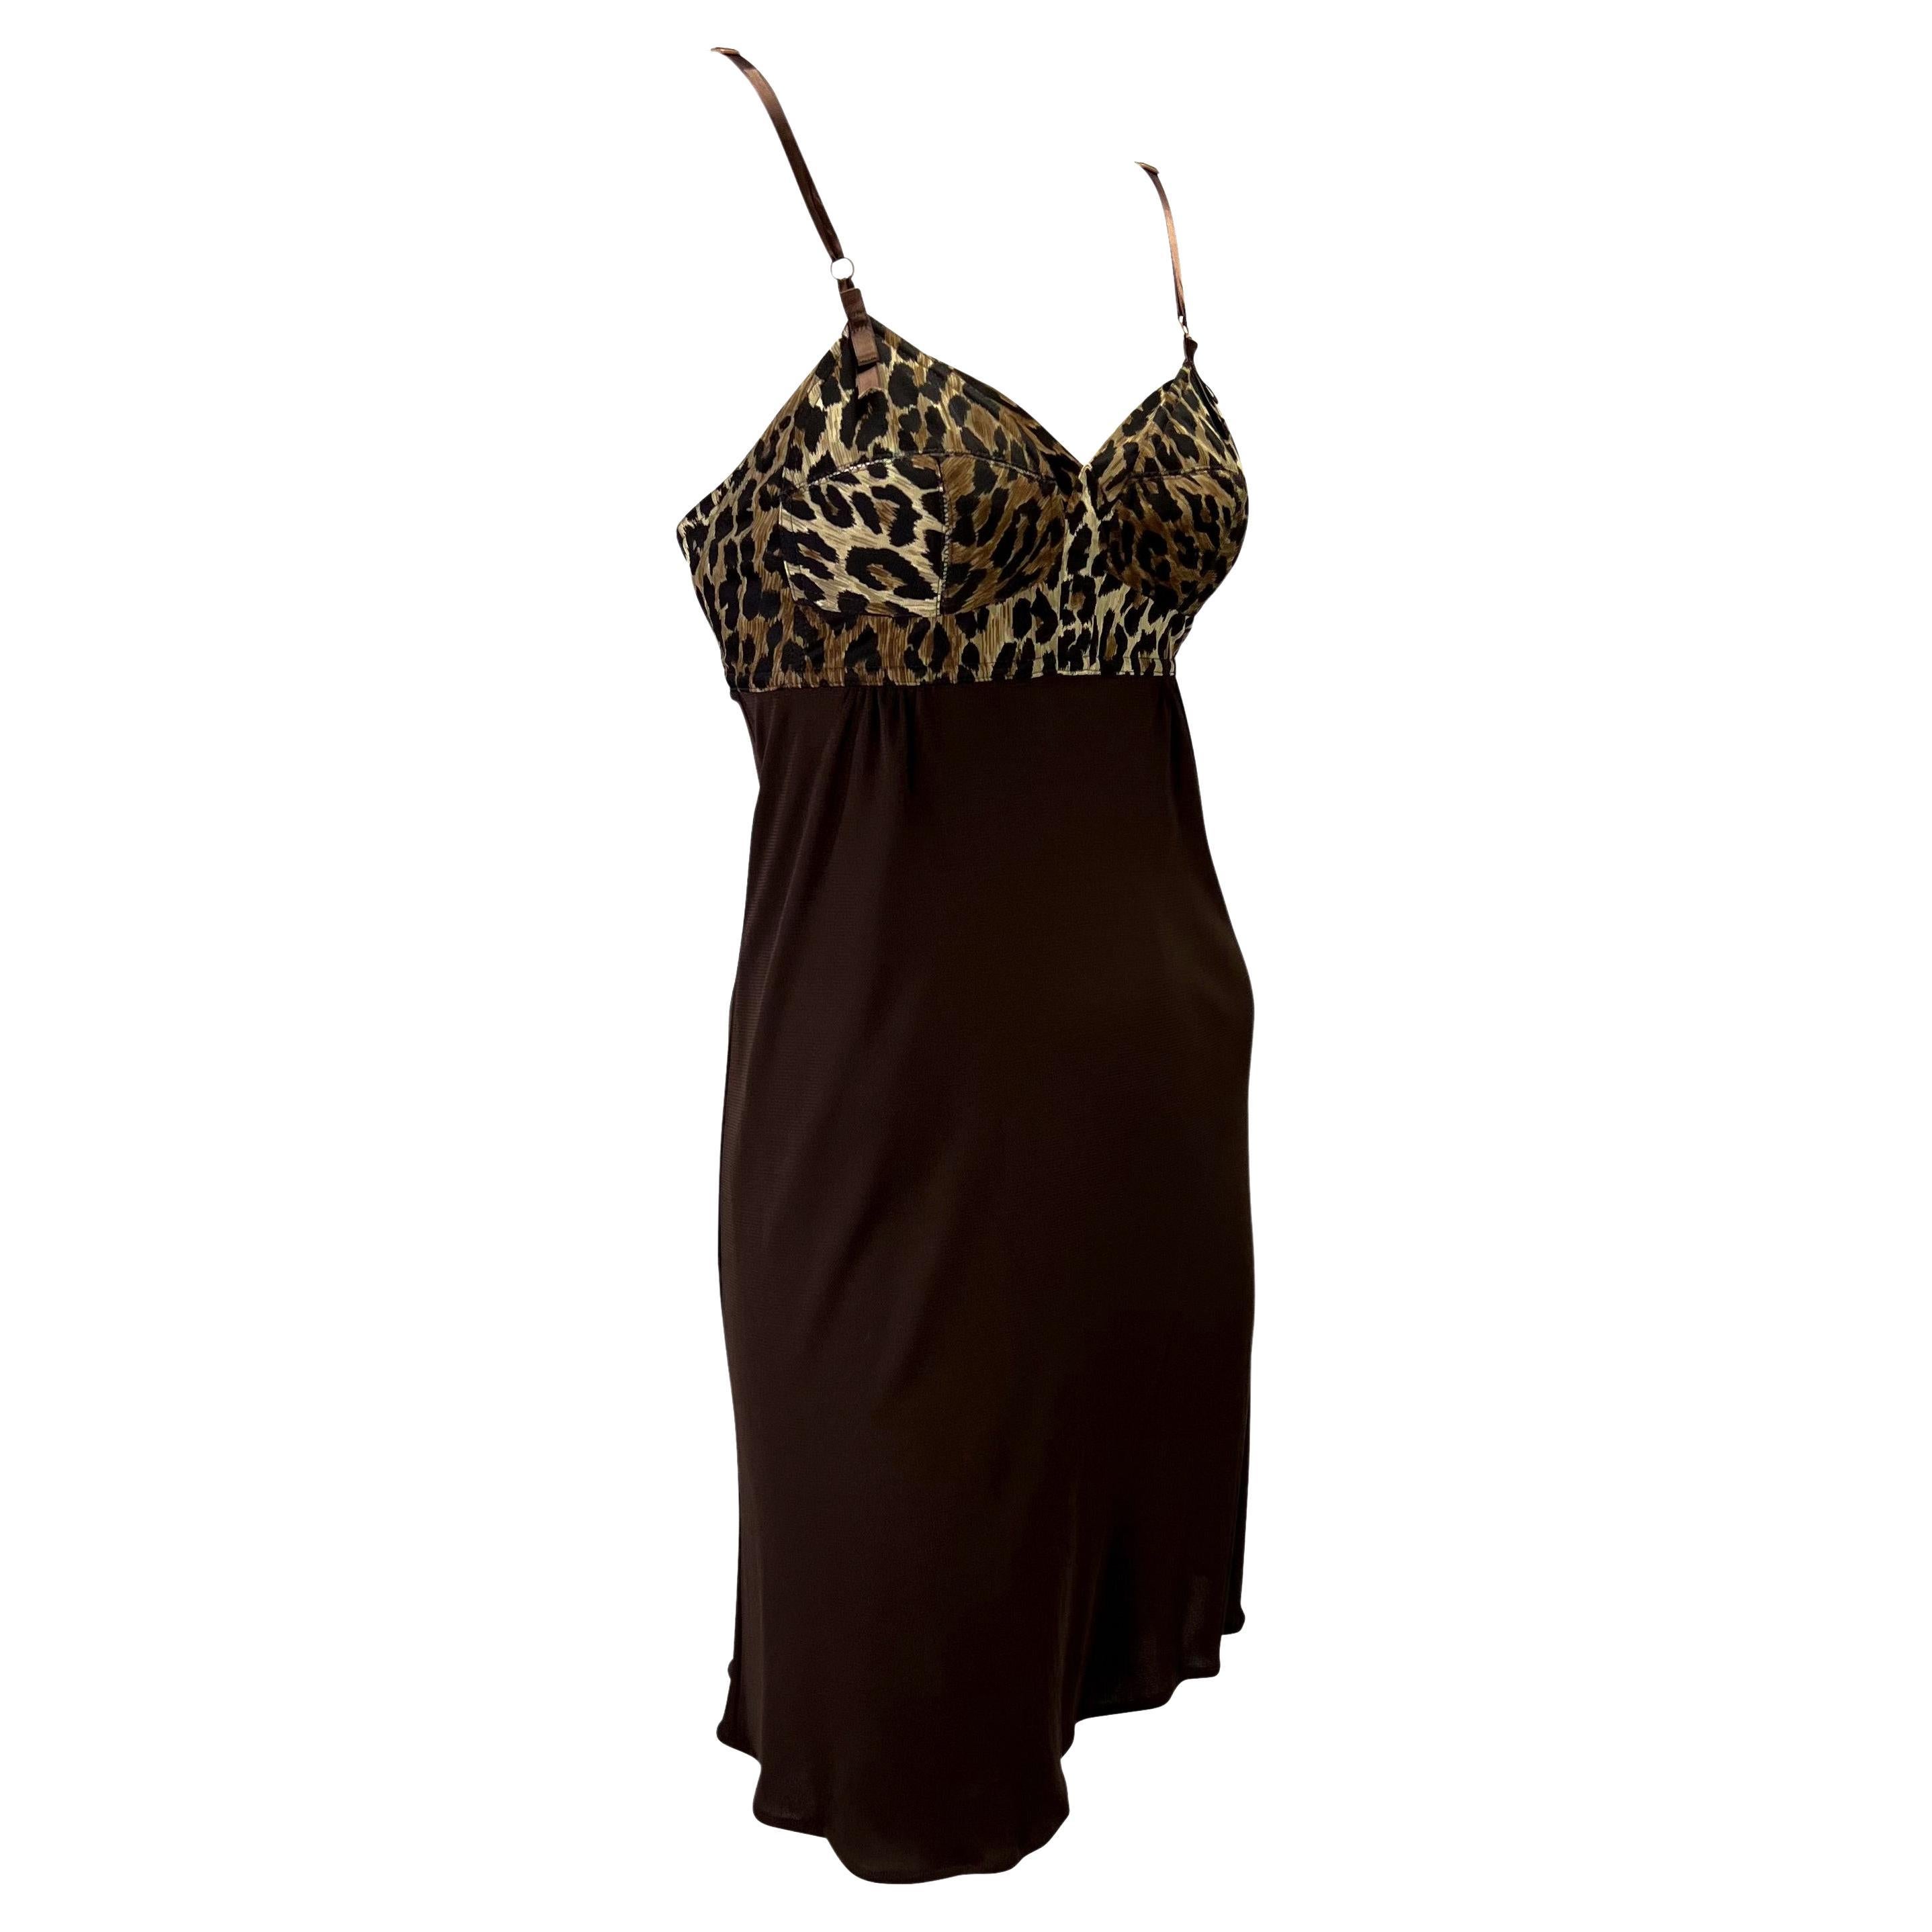 S/S 1997 Dolce & Gabbana SJP Cheetah Print Sheer Brown Bustier Slip Dress For Sale 2